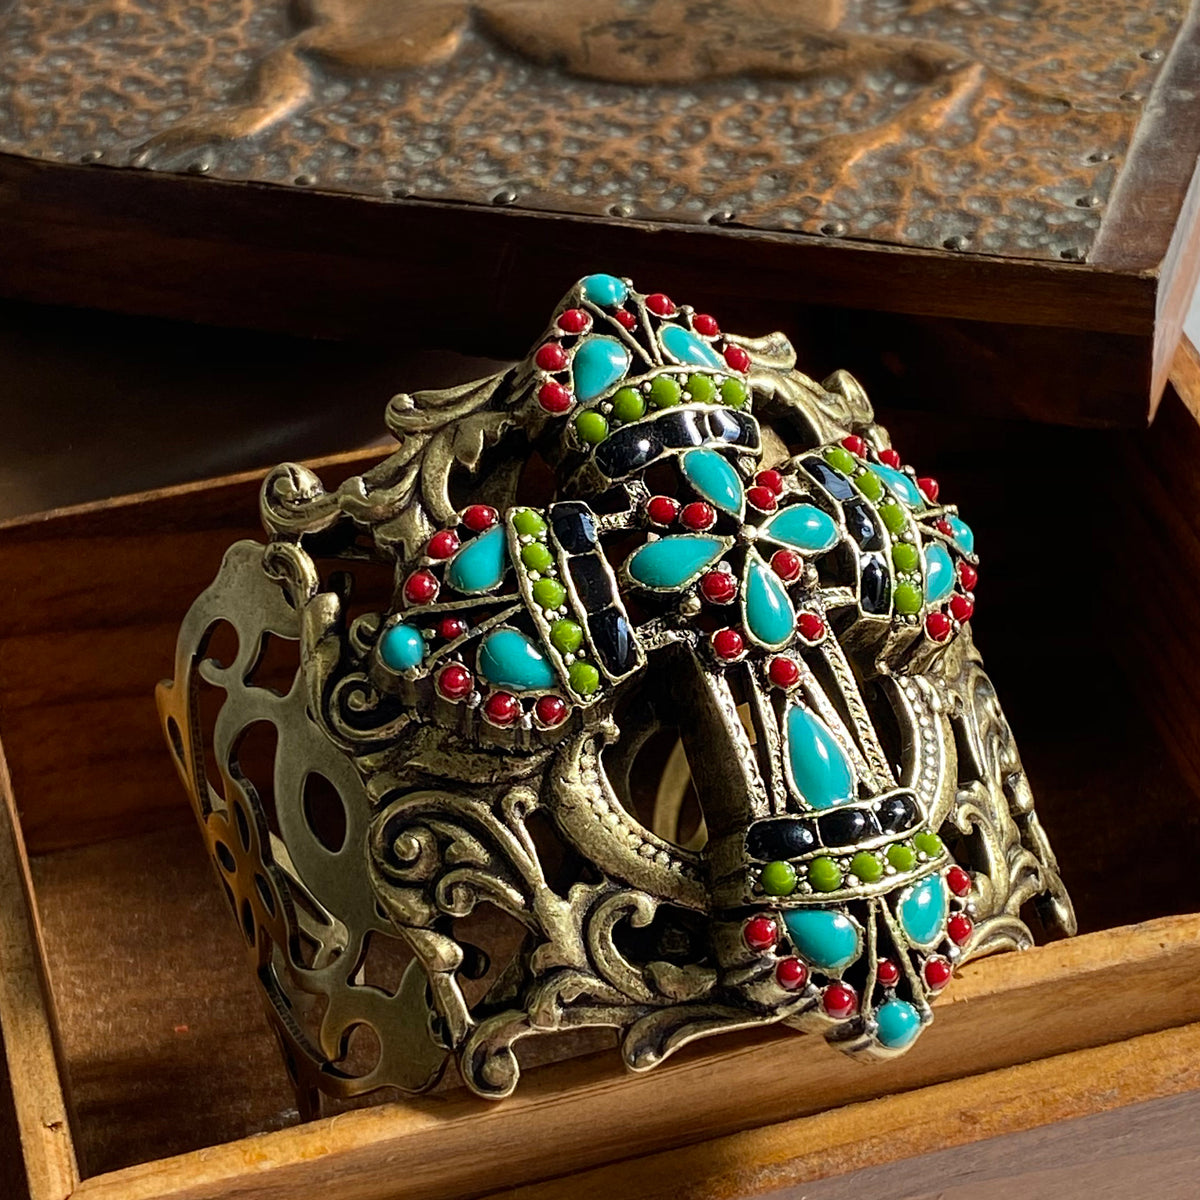 Mayan Cross Spiritual Cuff Bracelet, Turquoise Southwest Jewelry